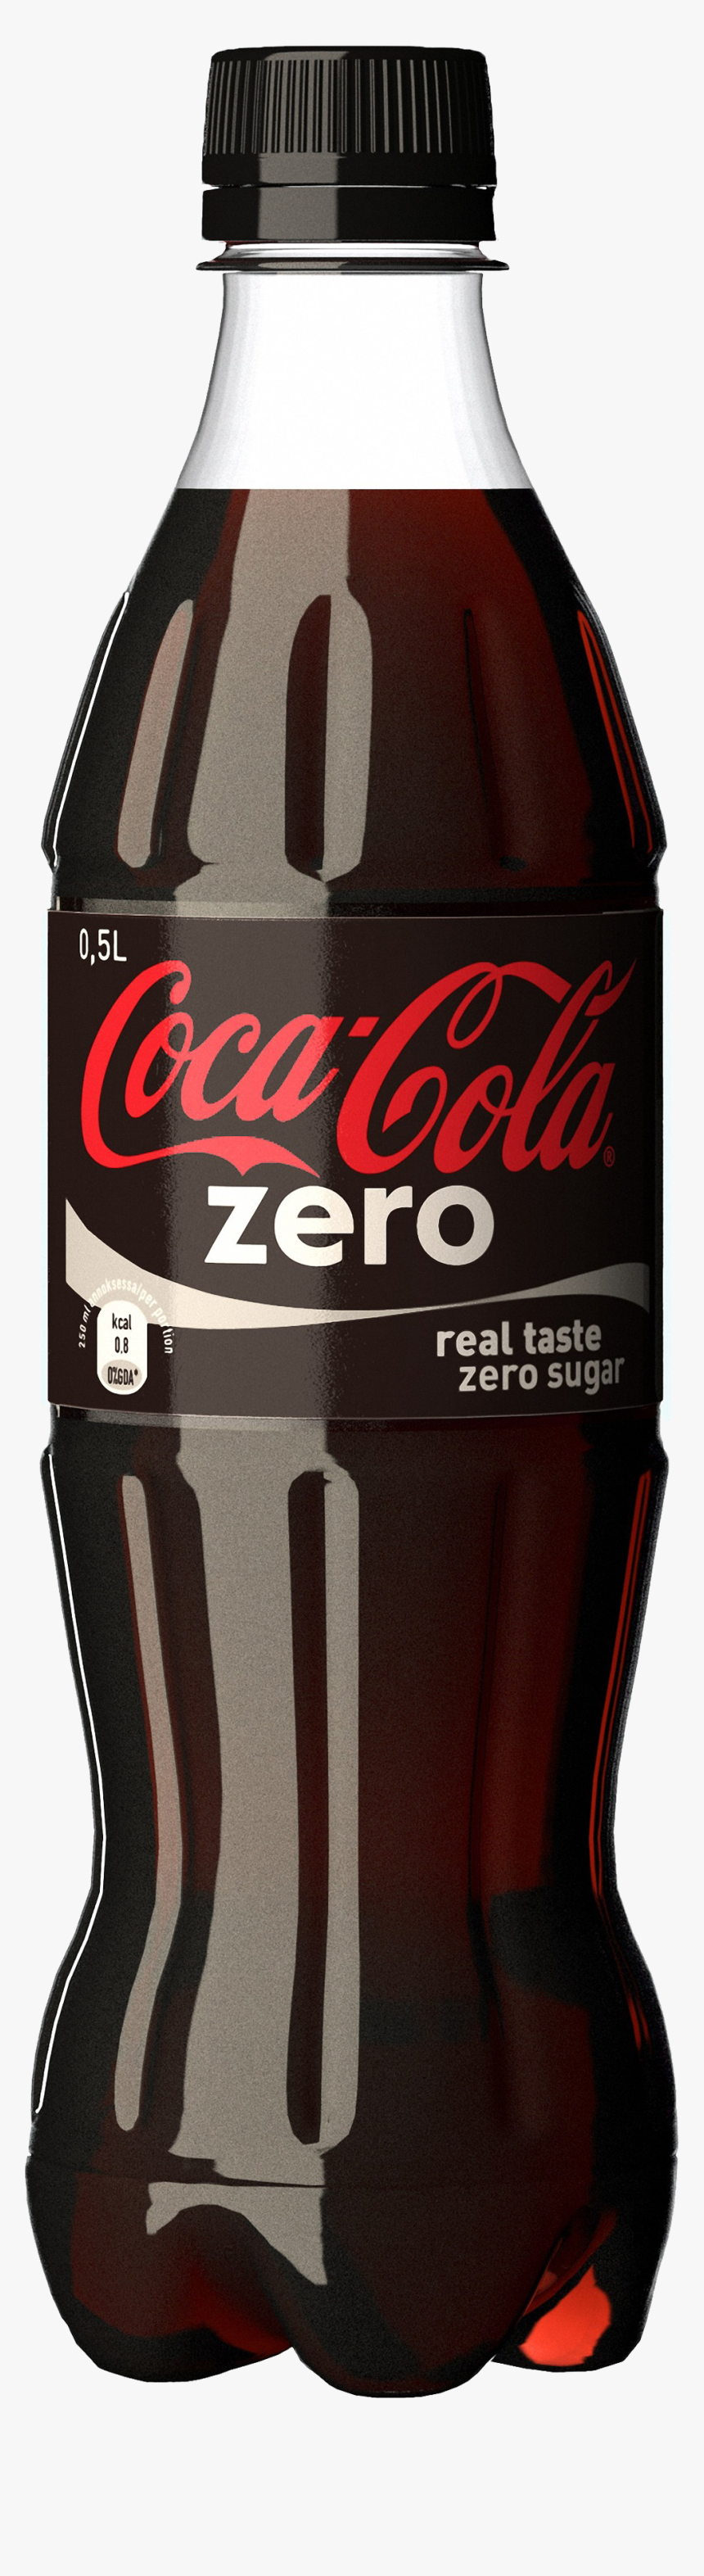 Coke Bottle Png - Coke Zero Bottle Png, Transparent Png, Free Download